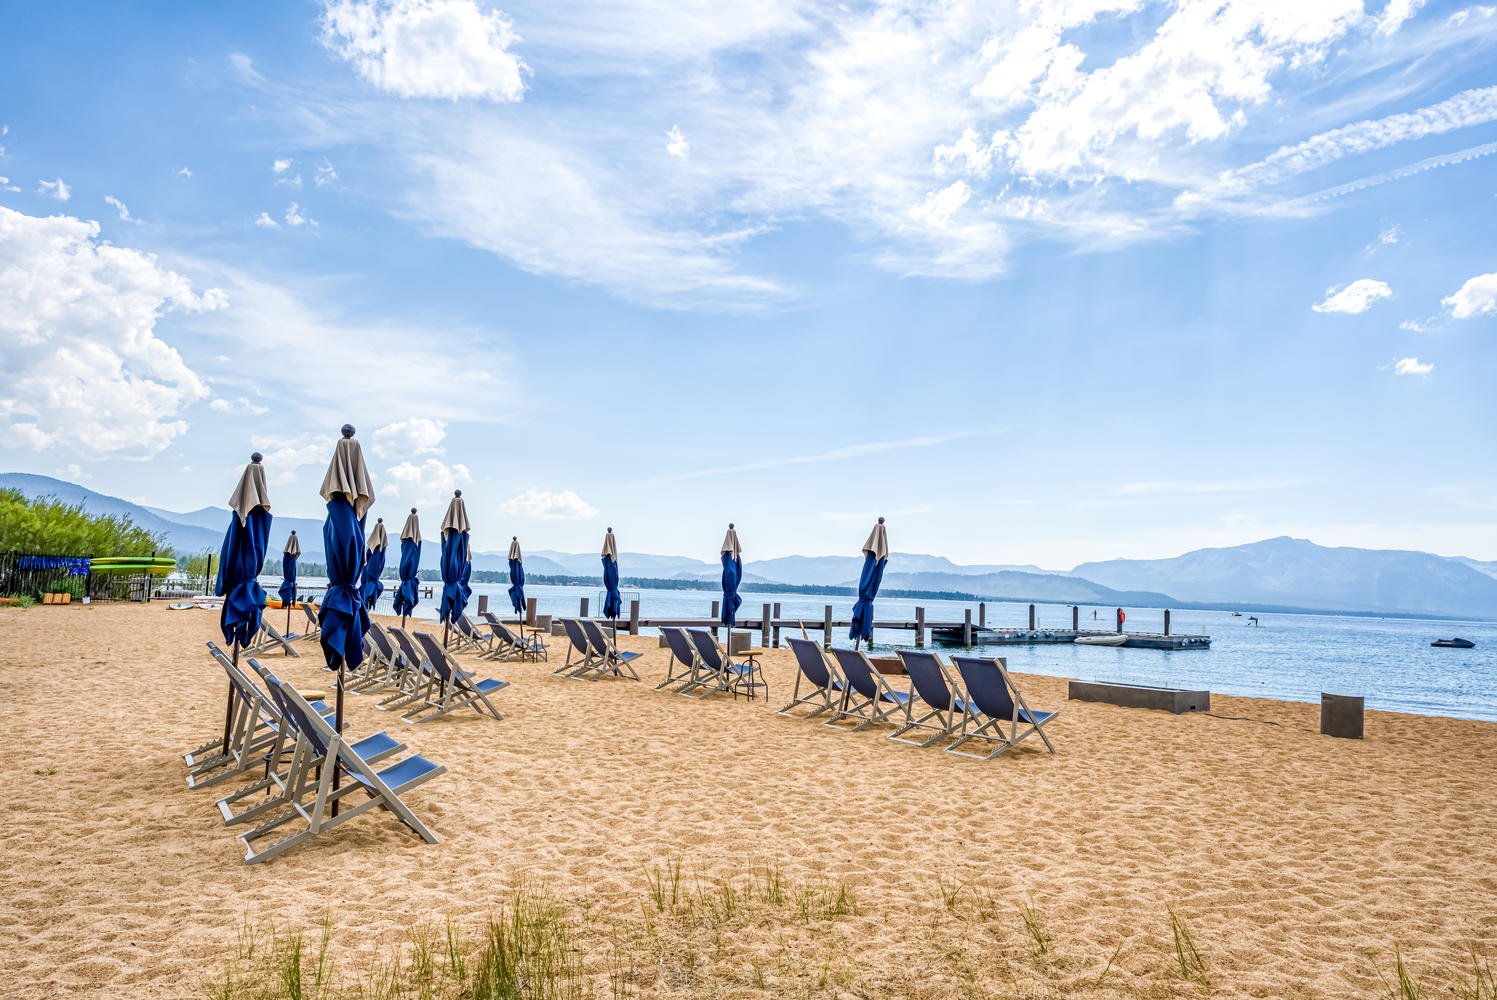 Tahoe Beach Club's private beach, where rows of beach chairs and vibrant umbrellas dot the sandy landscape.